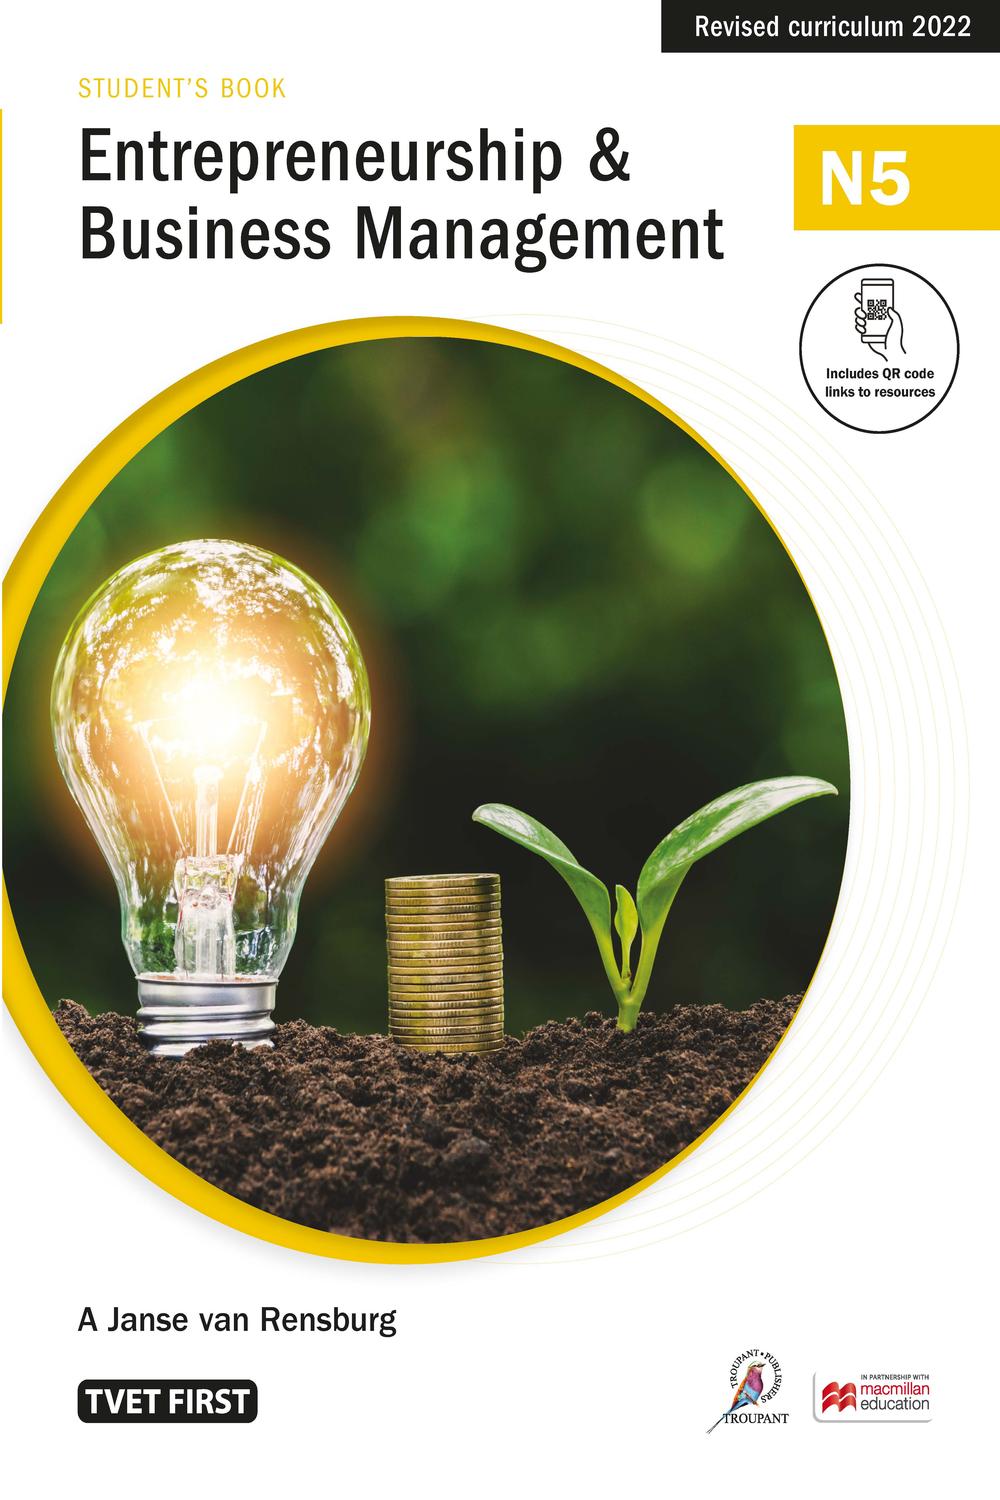 entrepreneurship and business management n5 1st edition a janse van rensburg 1430810114, 9781430810117